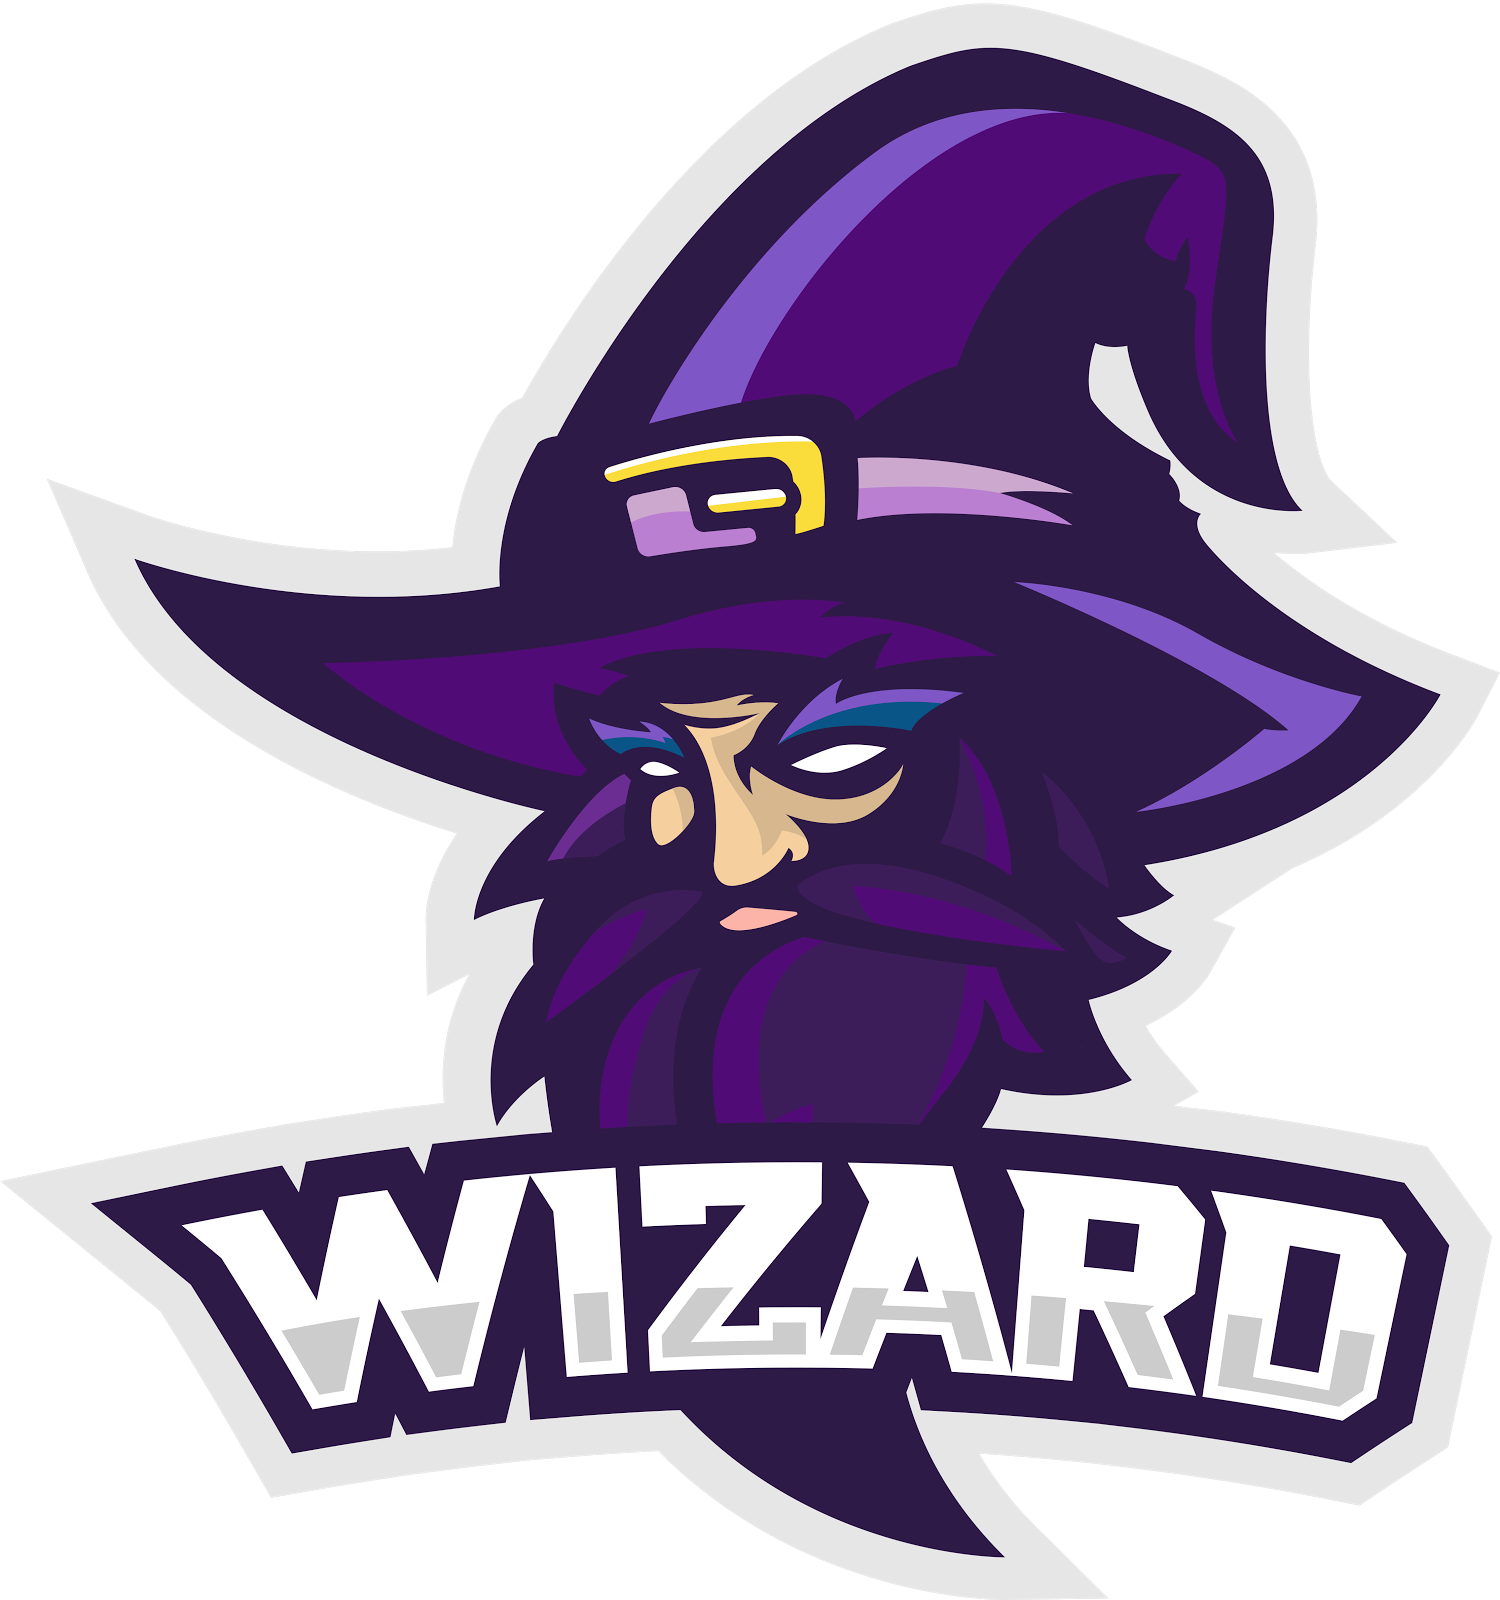 Визард. Wizard Esports logo. Ава Визард. W1zard аватарка. Lazy wizard